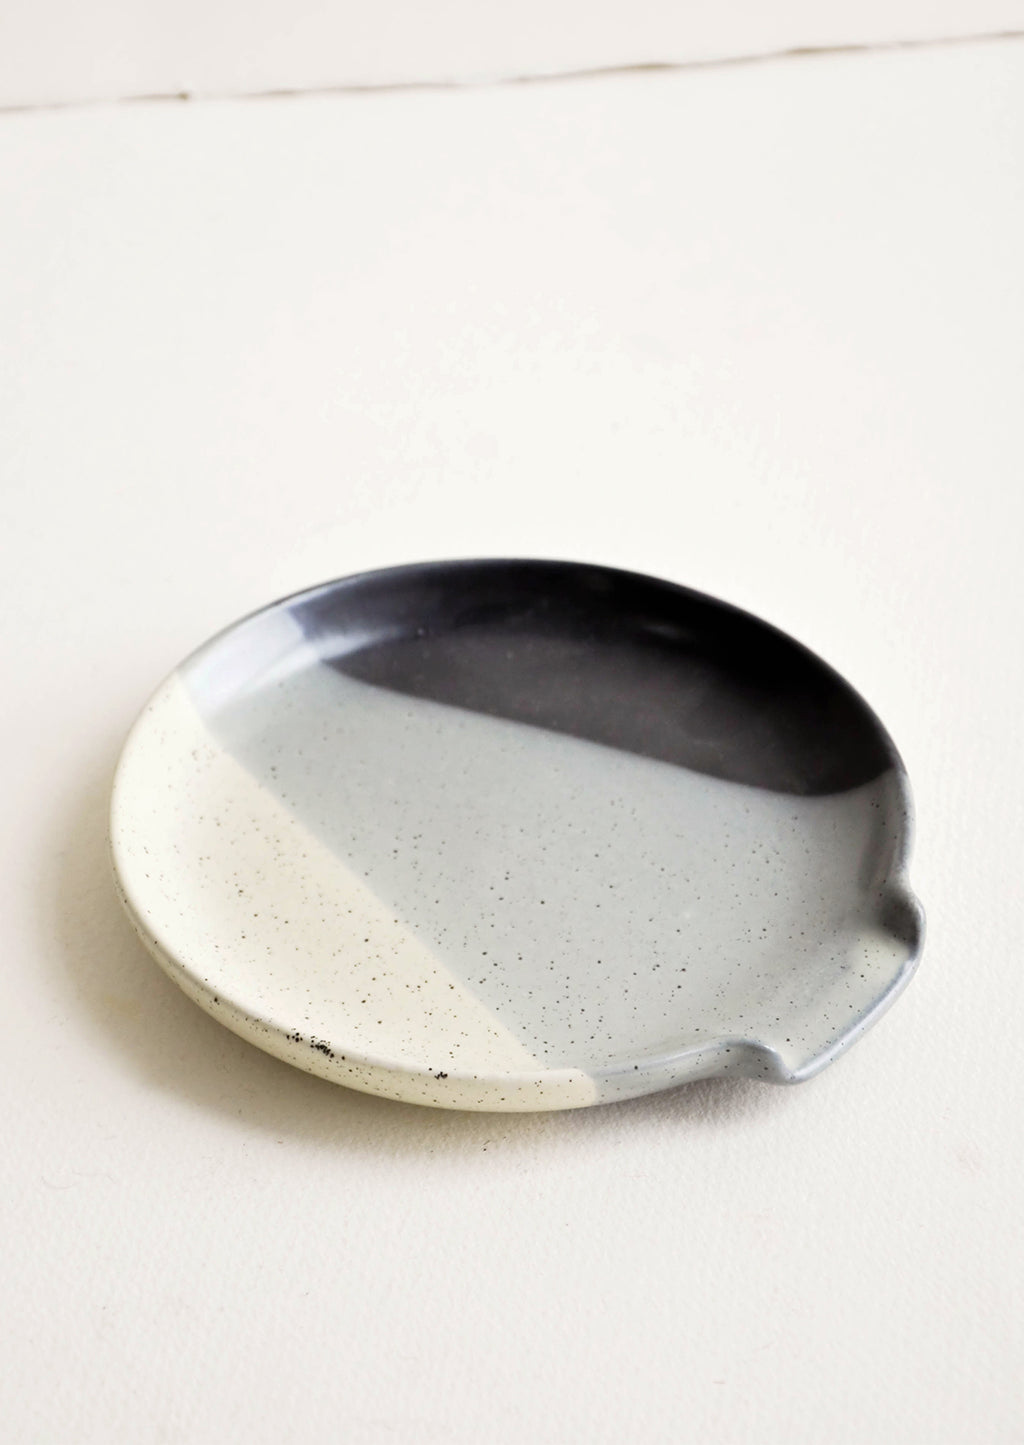 Tri-Tone Grey: Circular ceramic spoon rest in tri-color glaze of ivory, grey and black